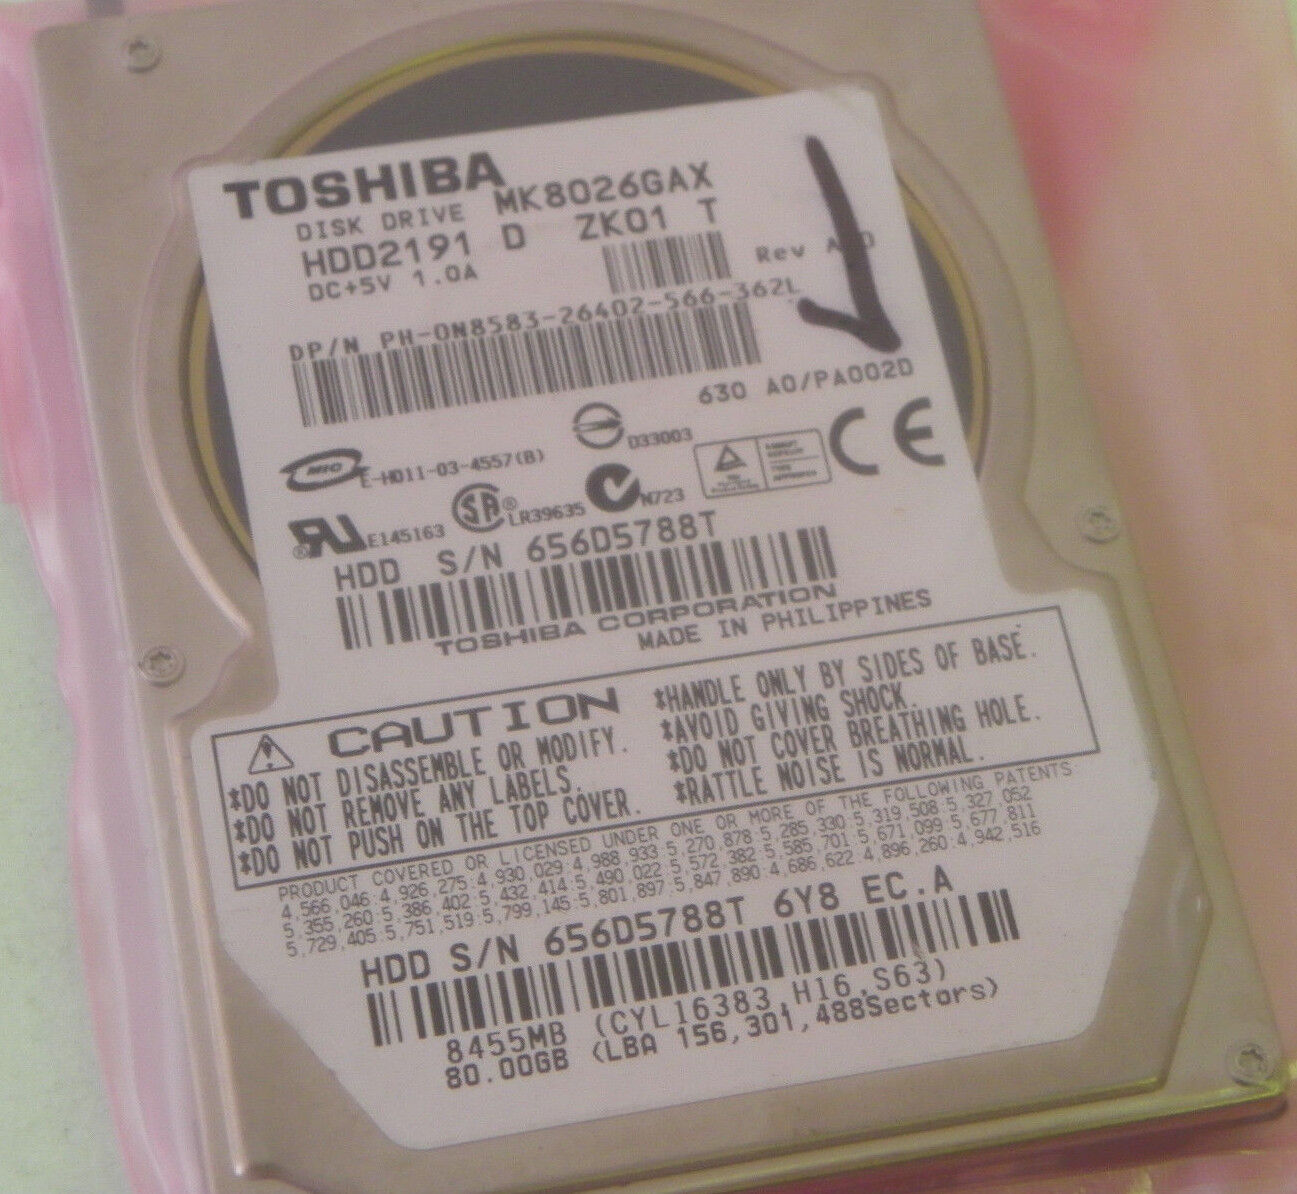 80GB Toshiba MK8026GAX Laptop IDE Hard Drive HDD2191 D ZK01 T DP/N 0N8583